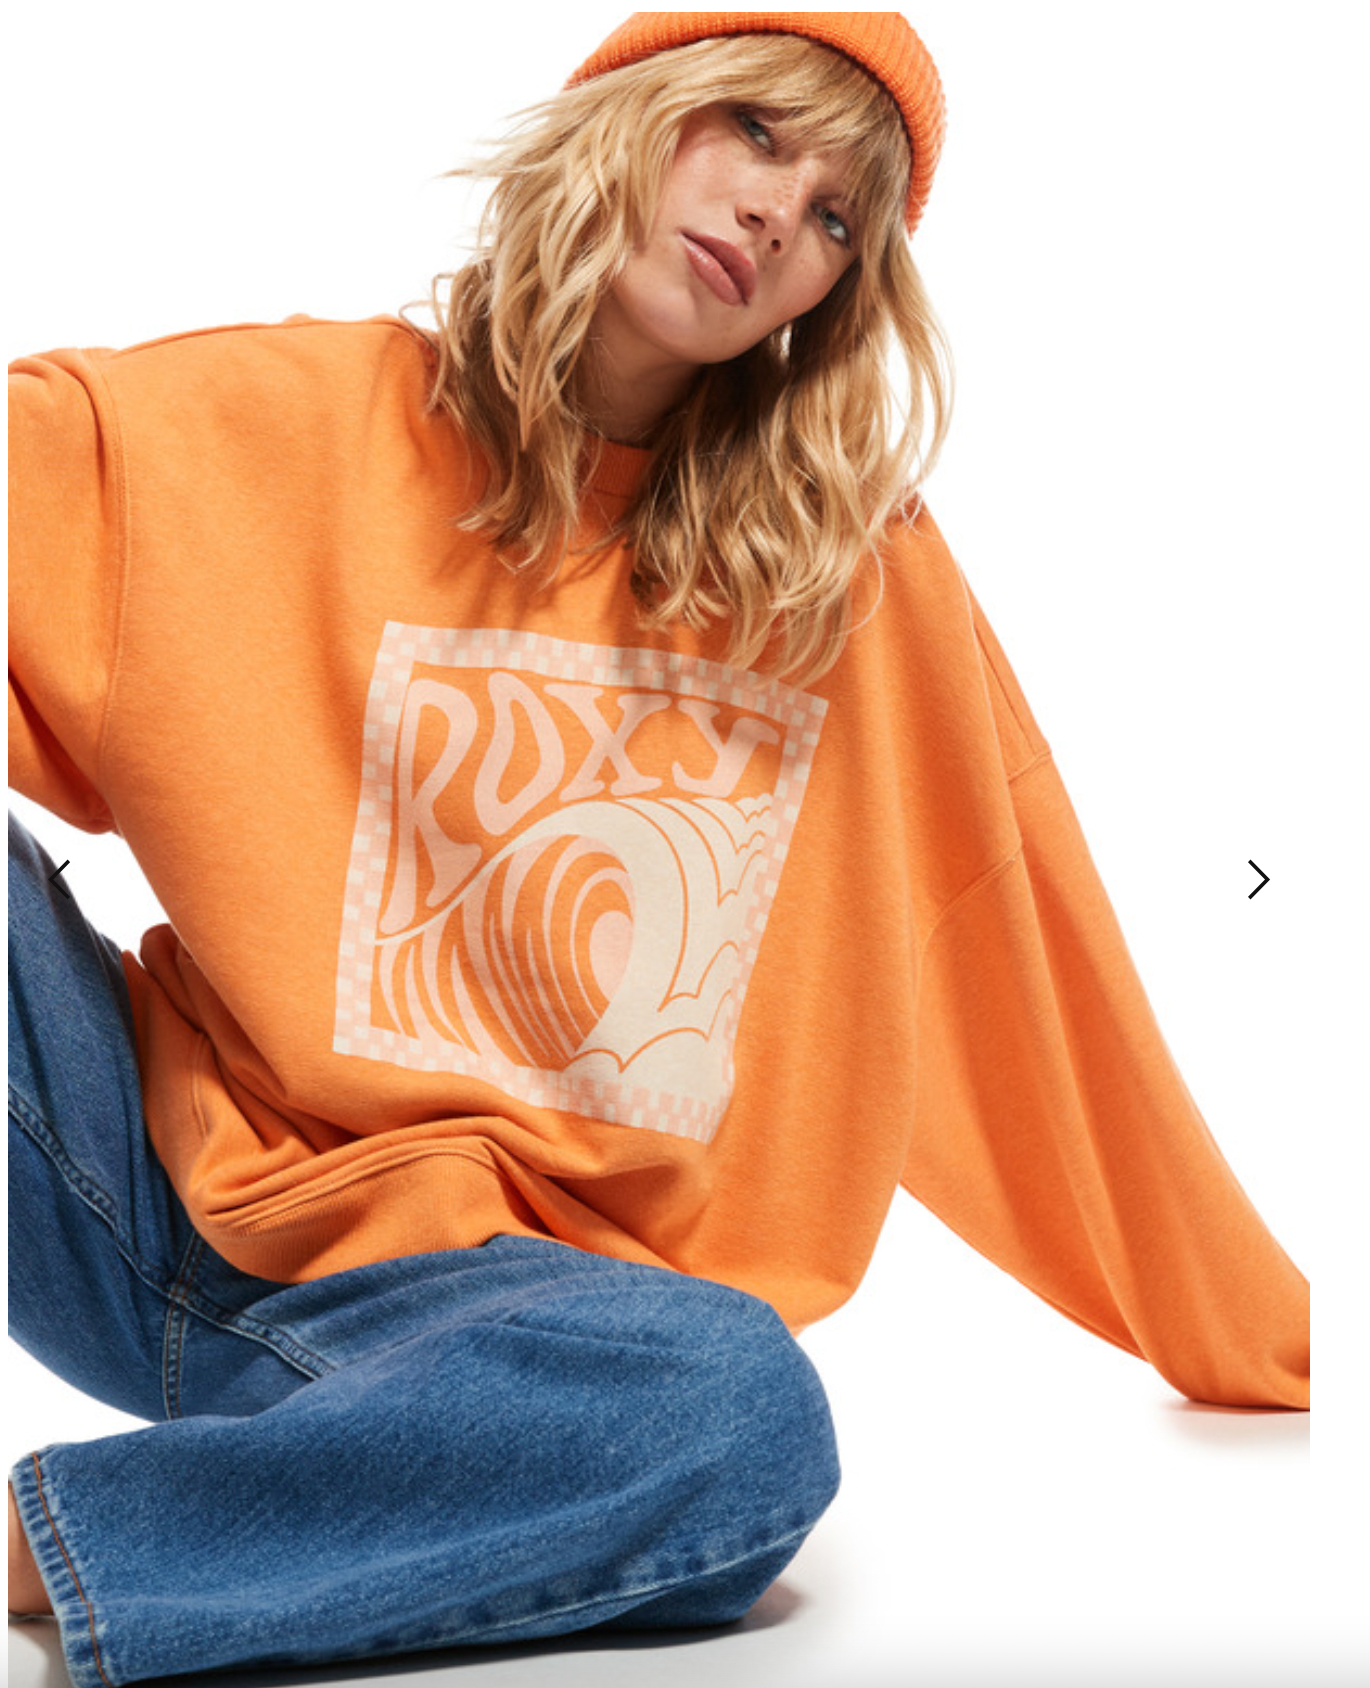 ROXY Take Your Place B - Sweatshirt for Women